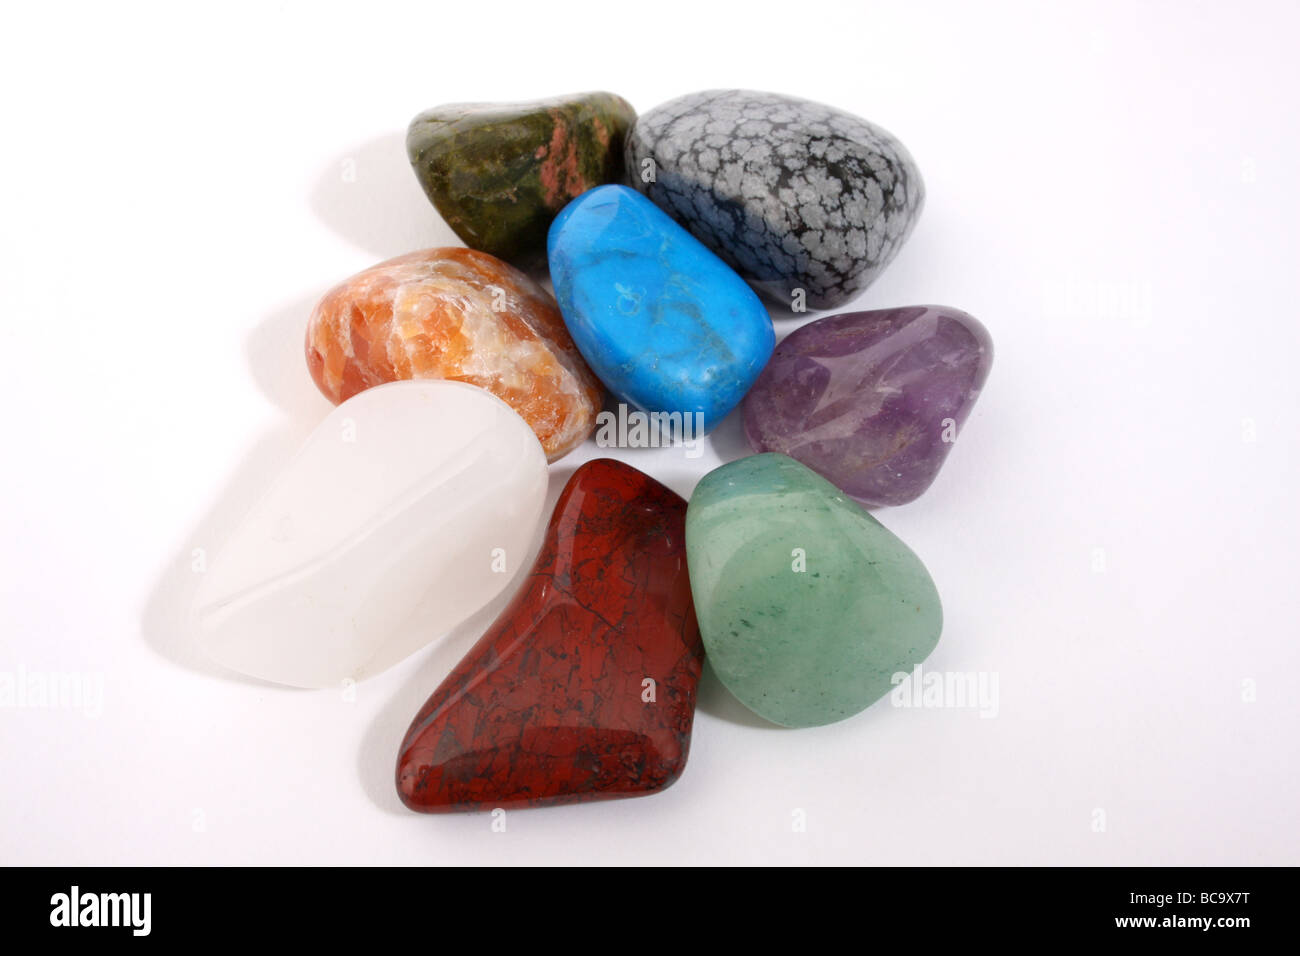 A mixture of healing gemstones Stock Photo